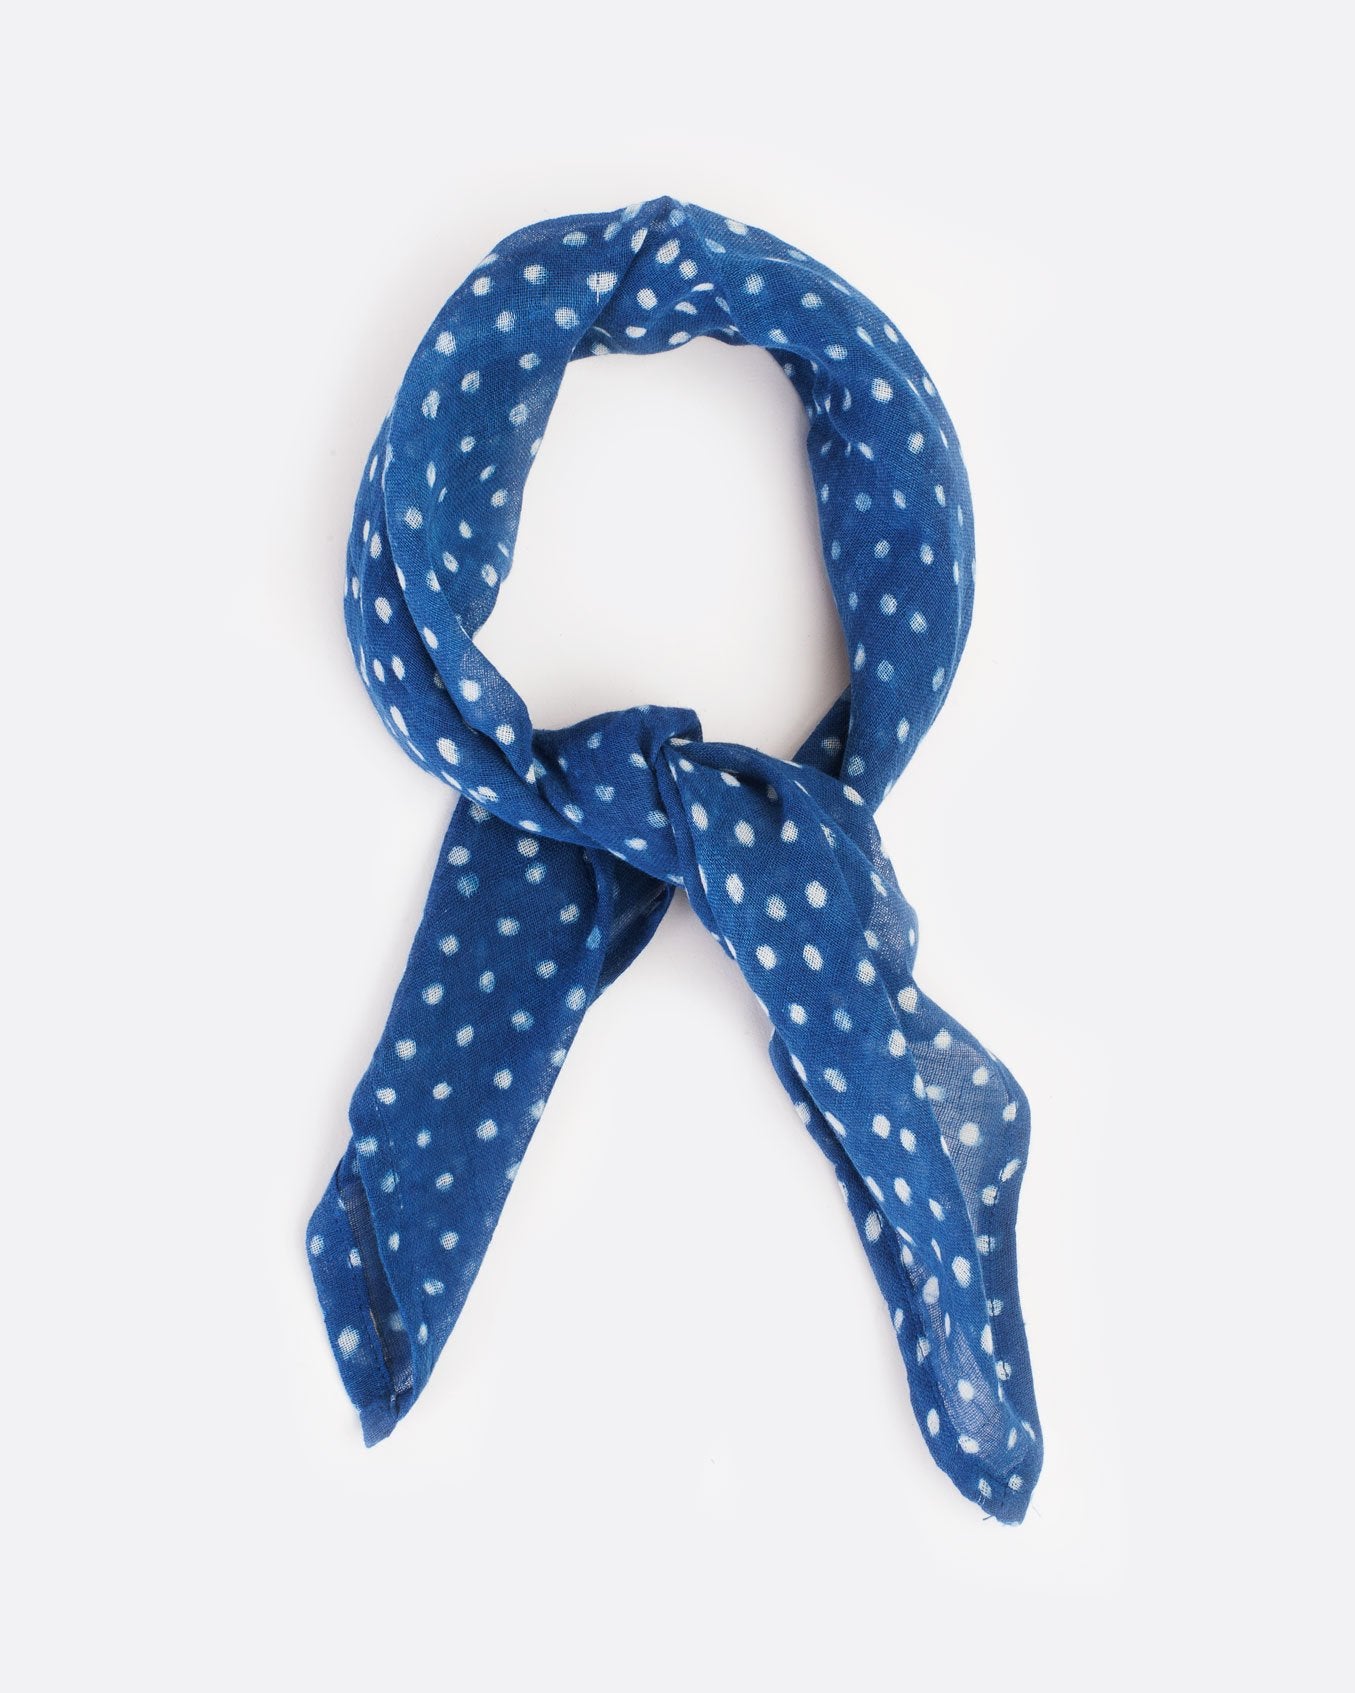 Light blue bandana with white polka dots, shown tied.